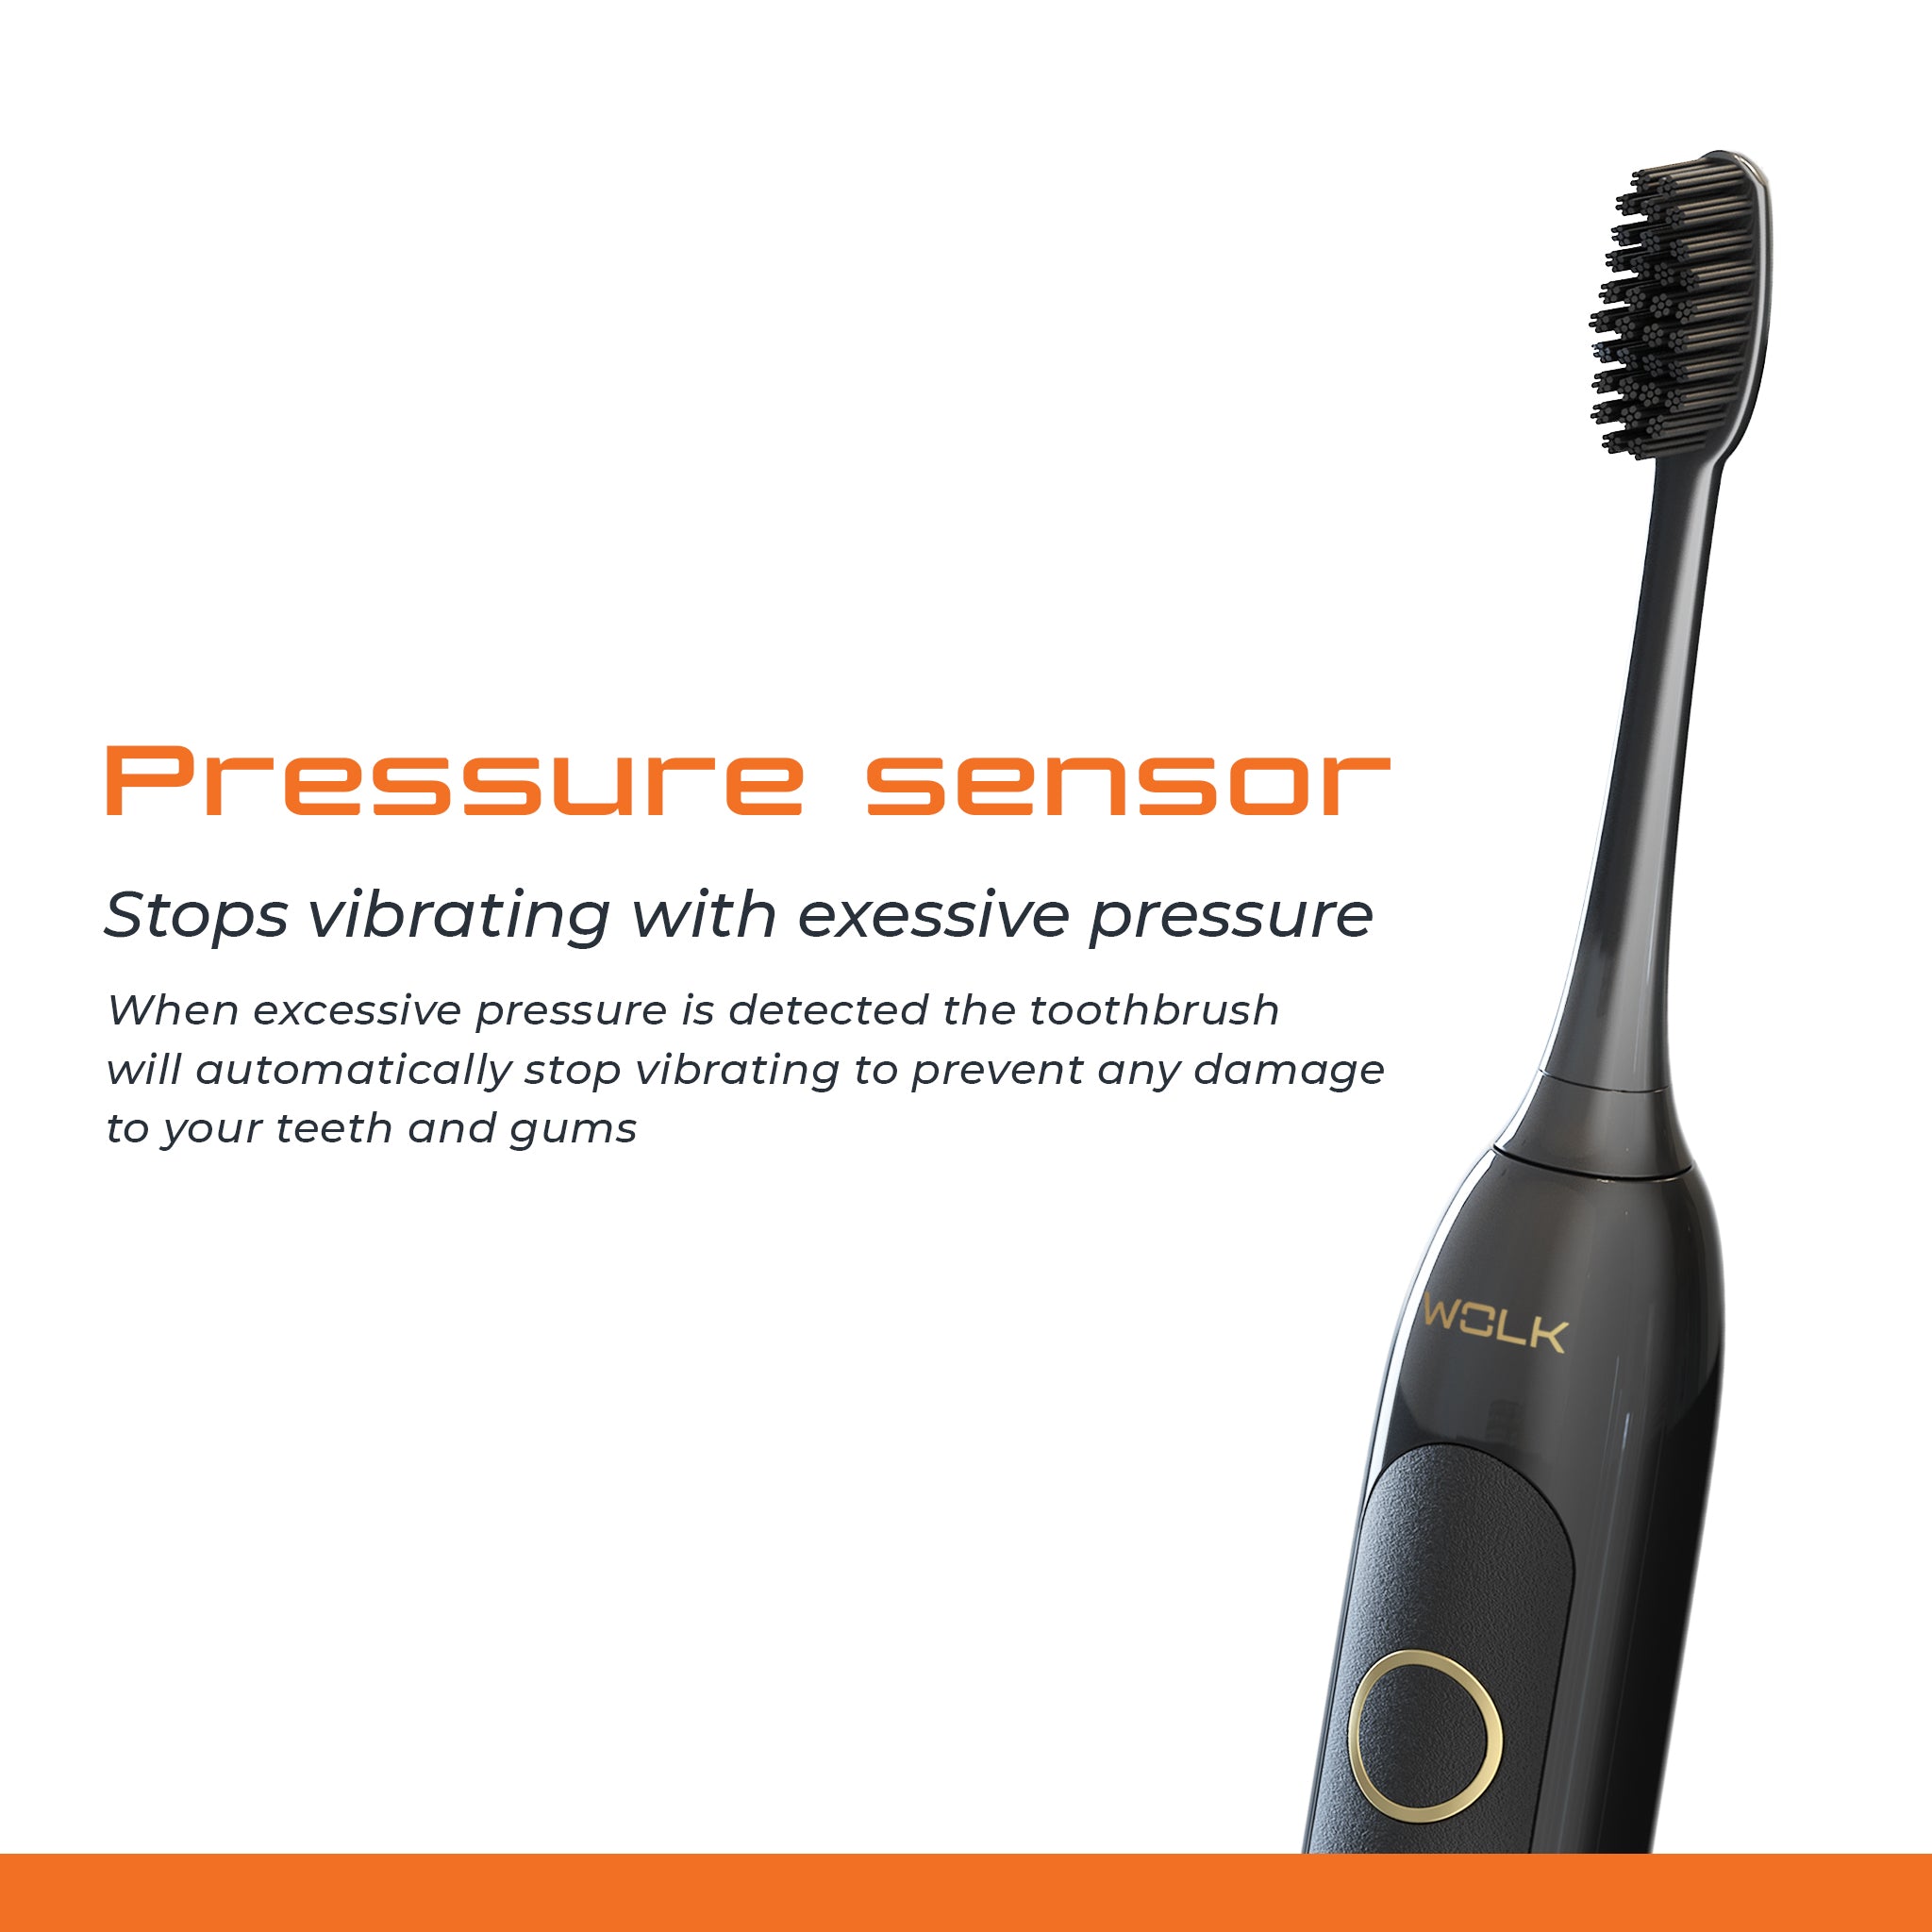 Wolk T6421 Ultra Whitening Toothbrush with Pressure Sensor & 5 Brushing Modes, 8 Dupont Brush Heads, Premium Travel Case, Rechargeable. (Black)